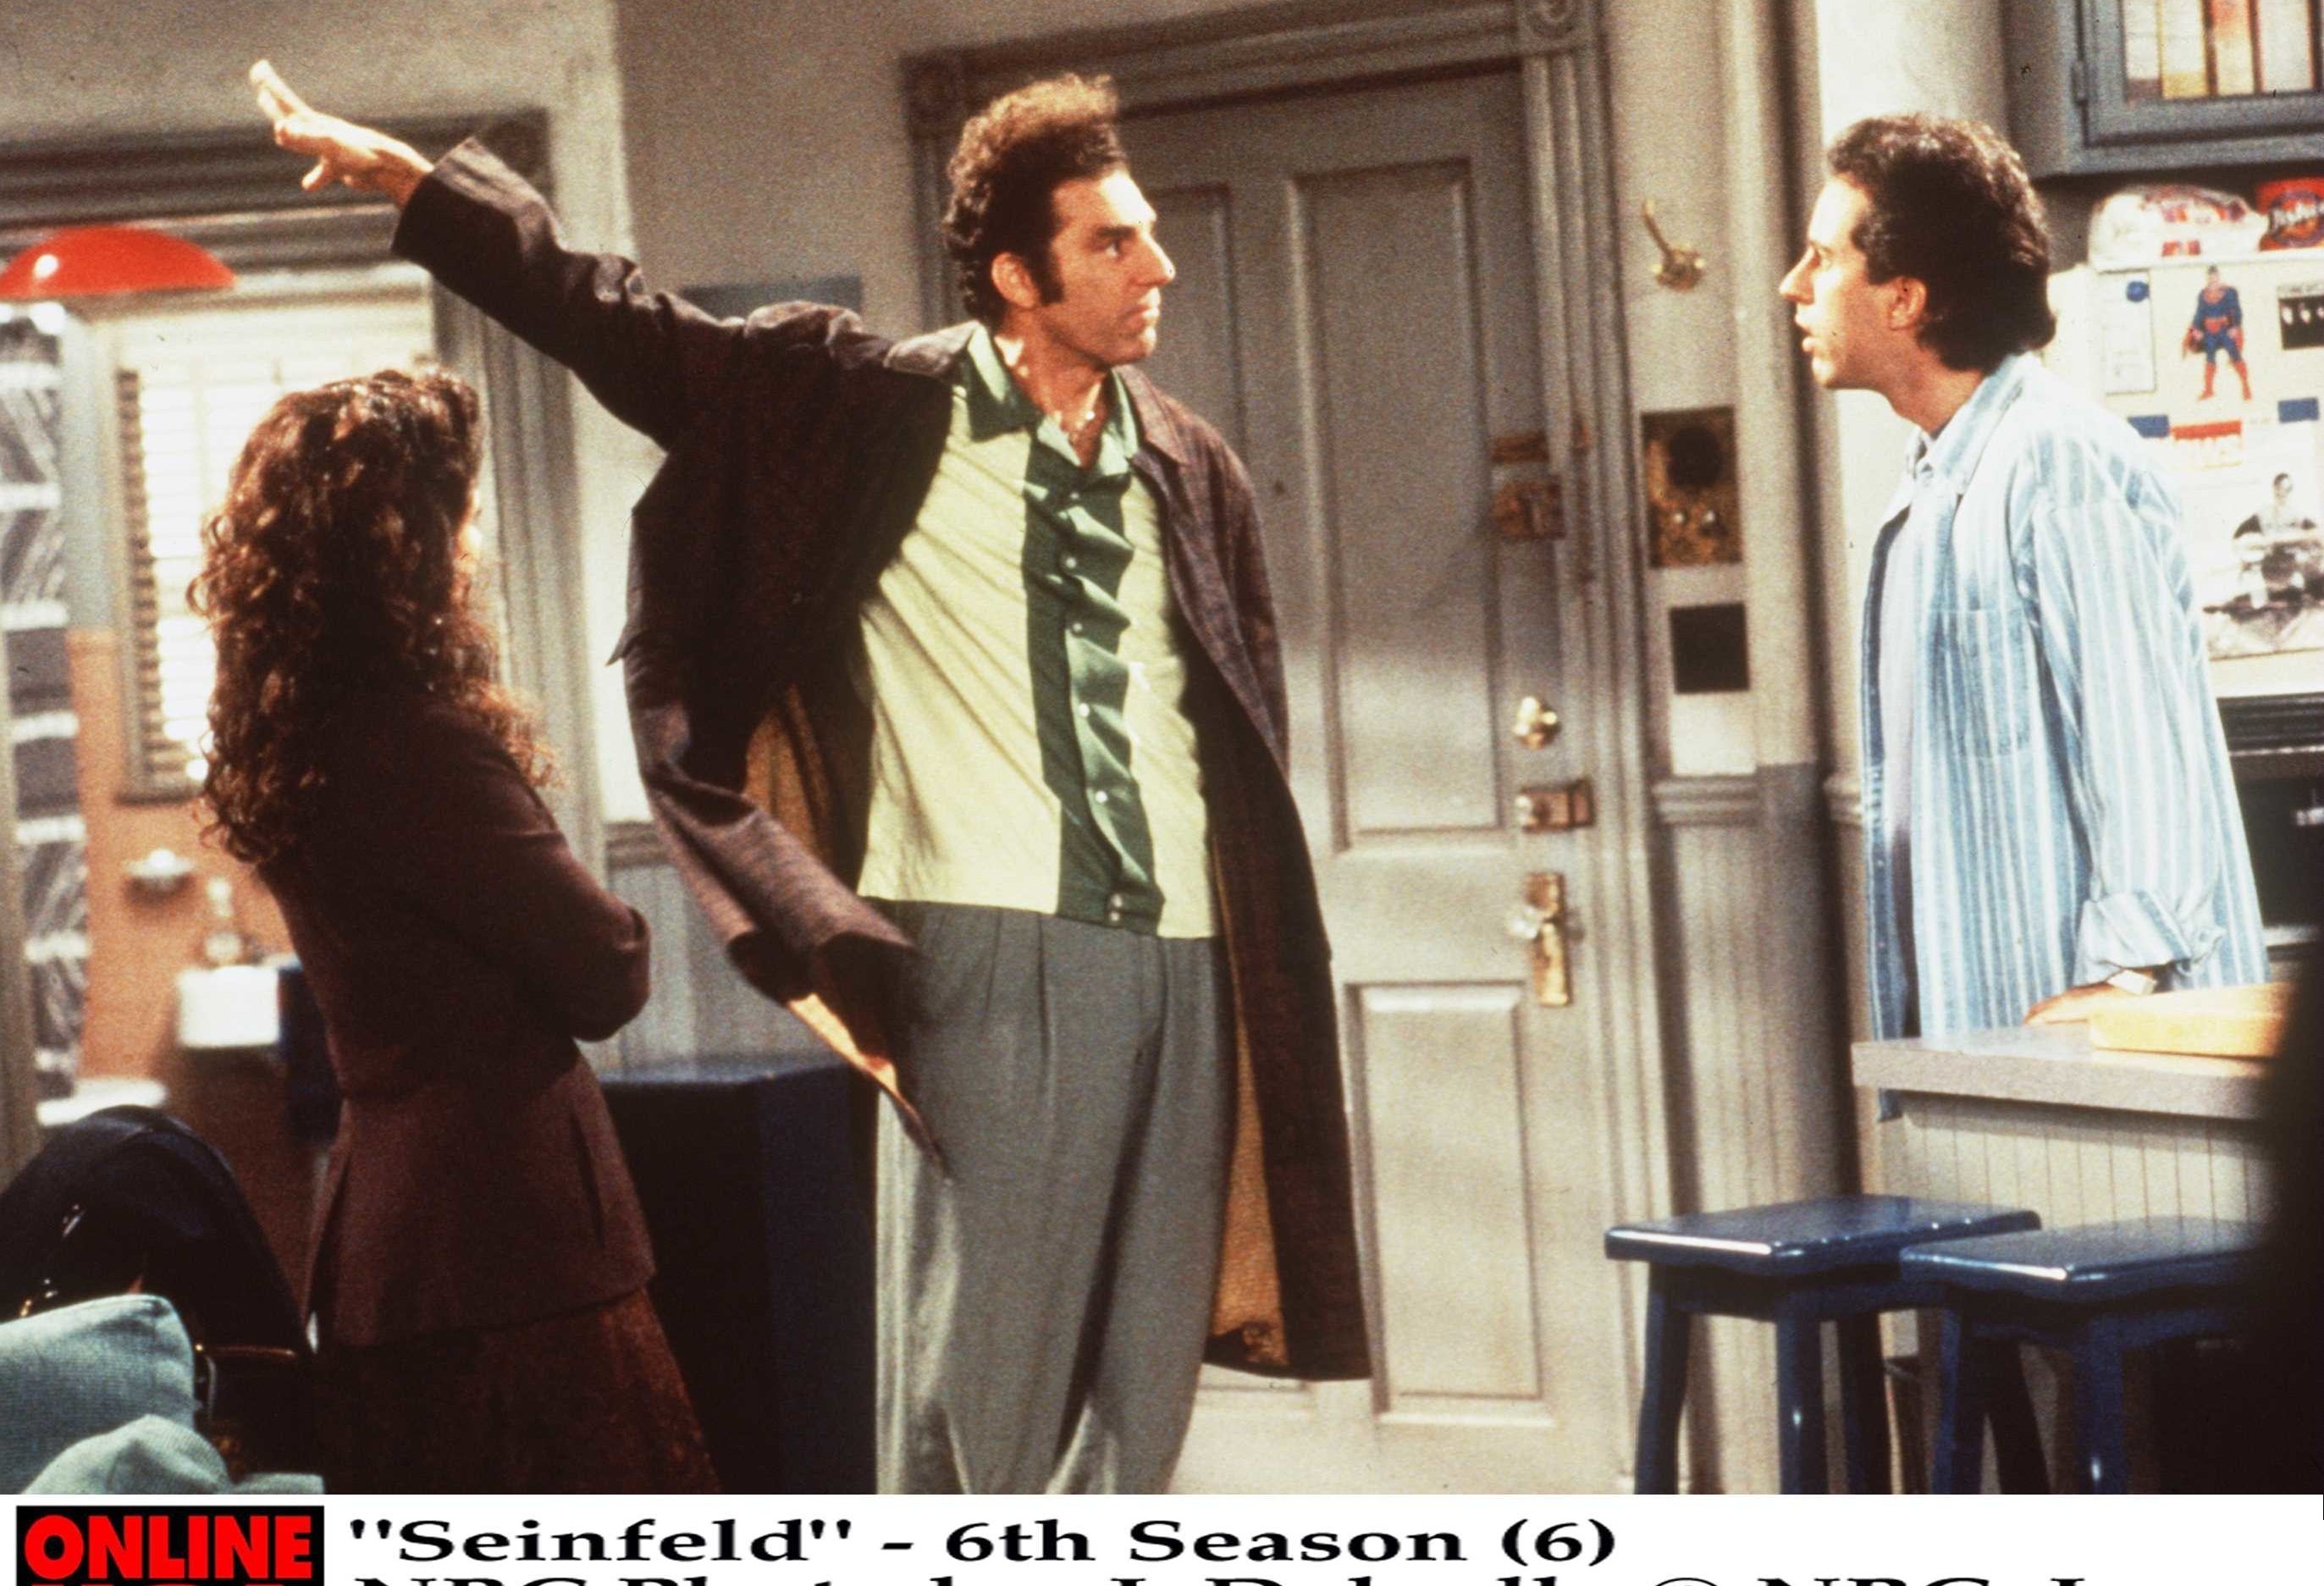 scene from season six of seinfeld with seinfeld, kramer, and elaine